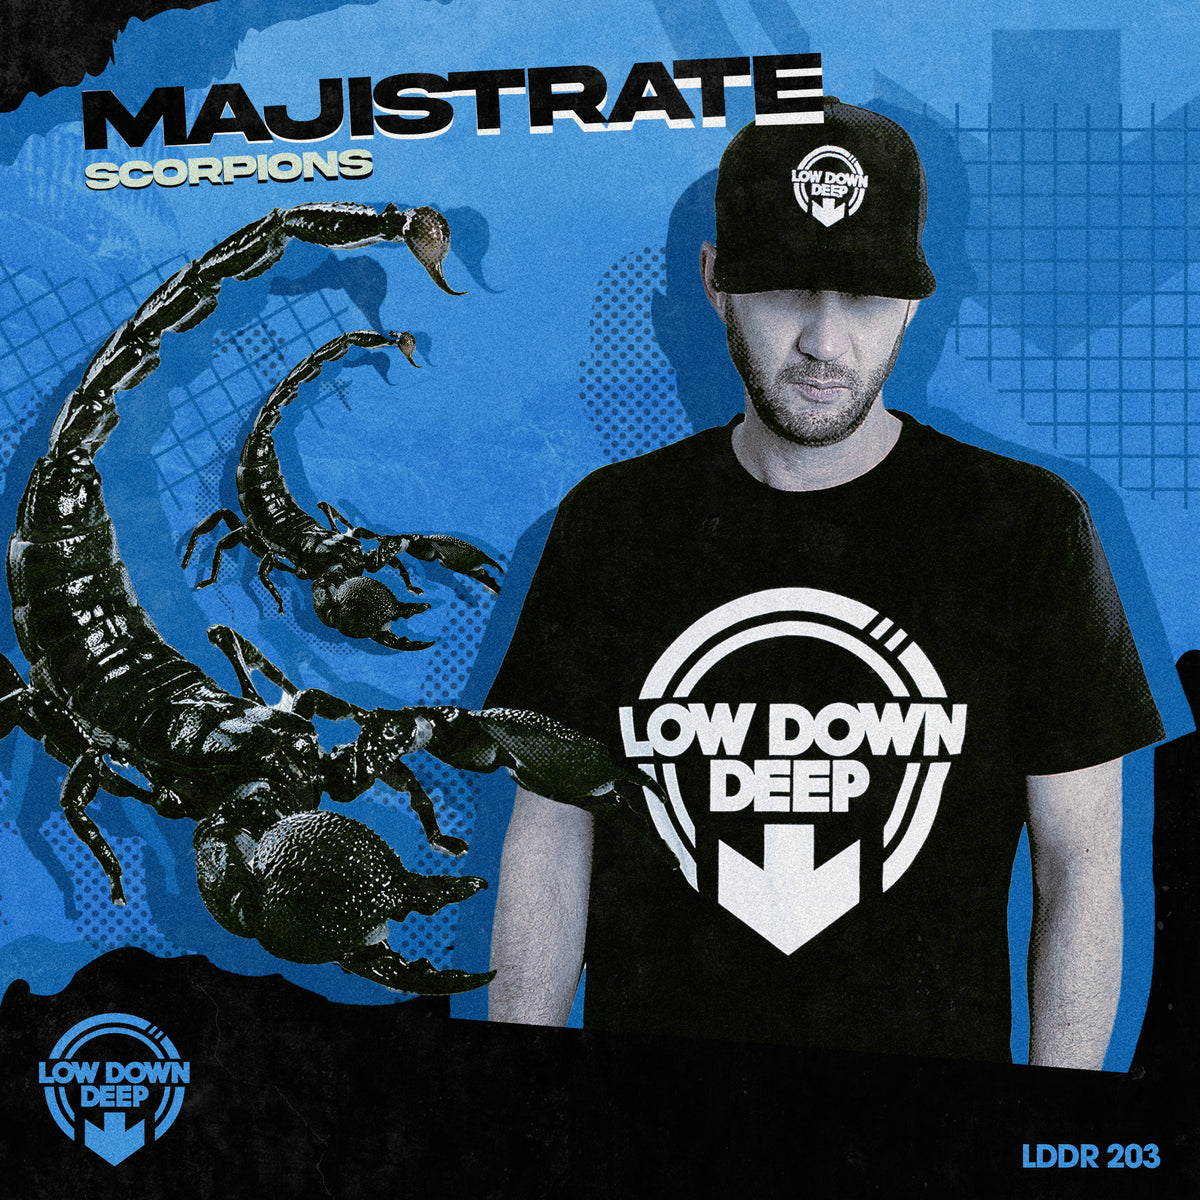 LDD 203 - Majistrate 'Scorpions'